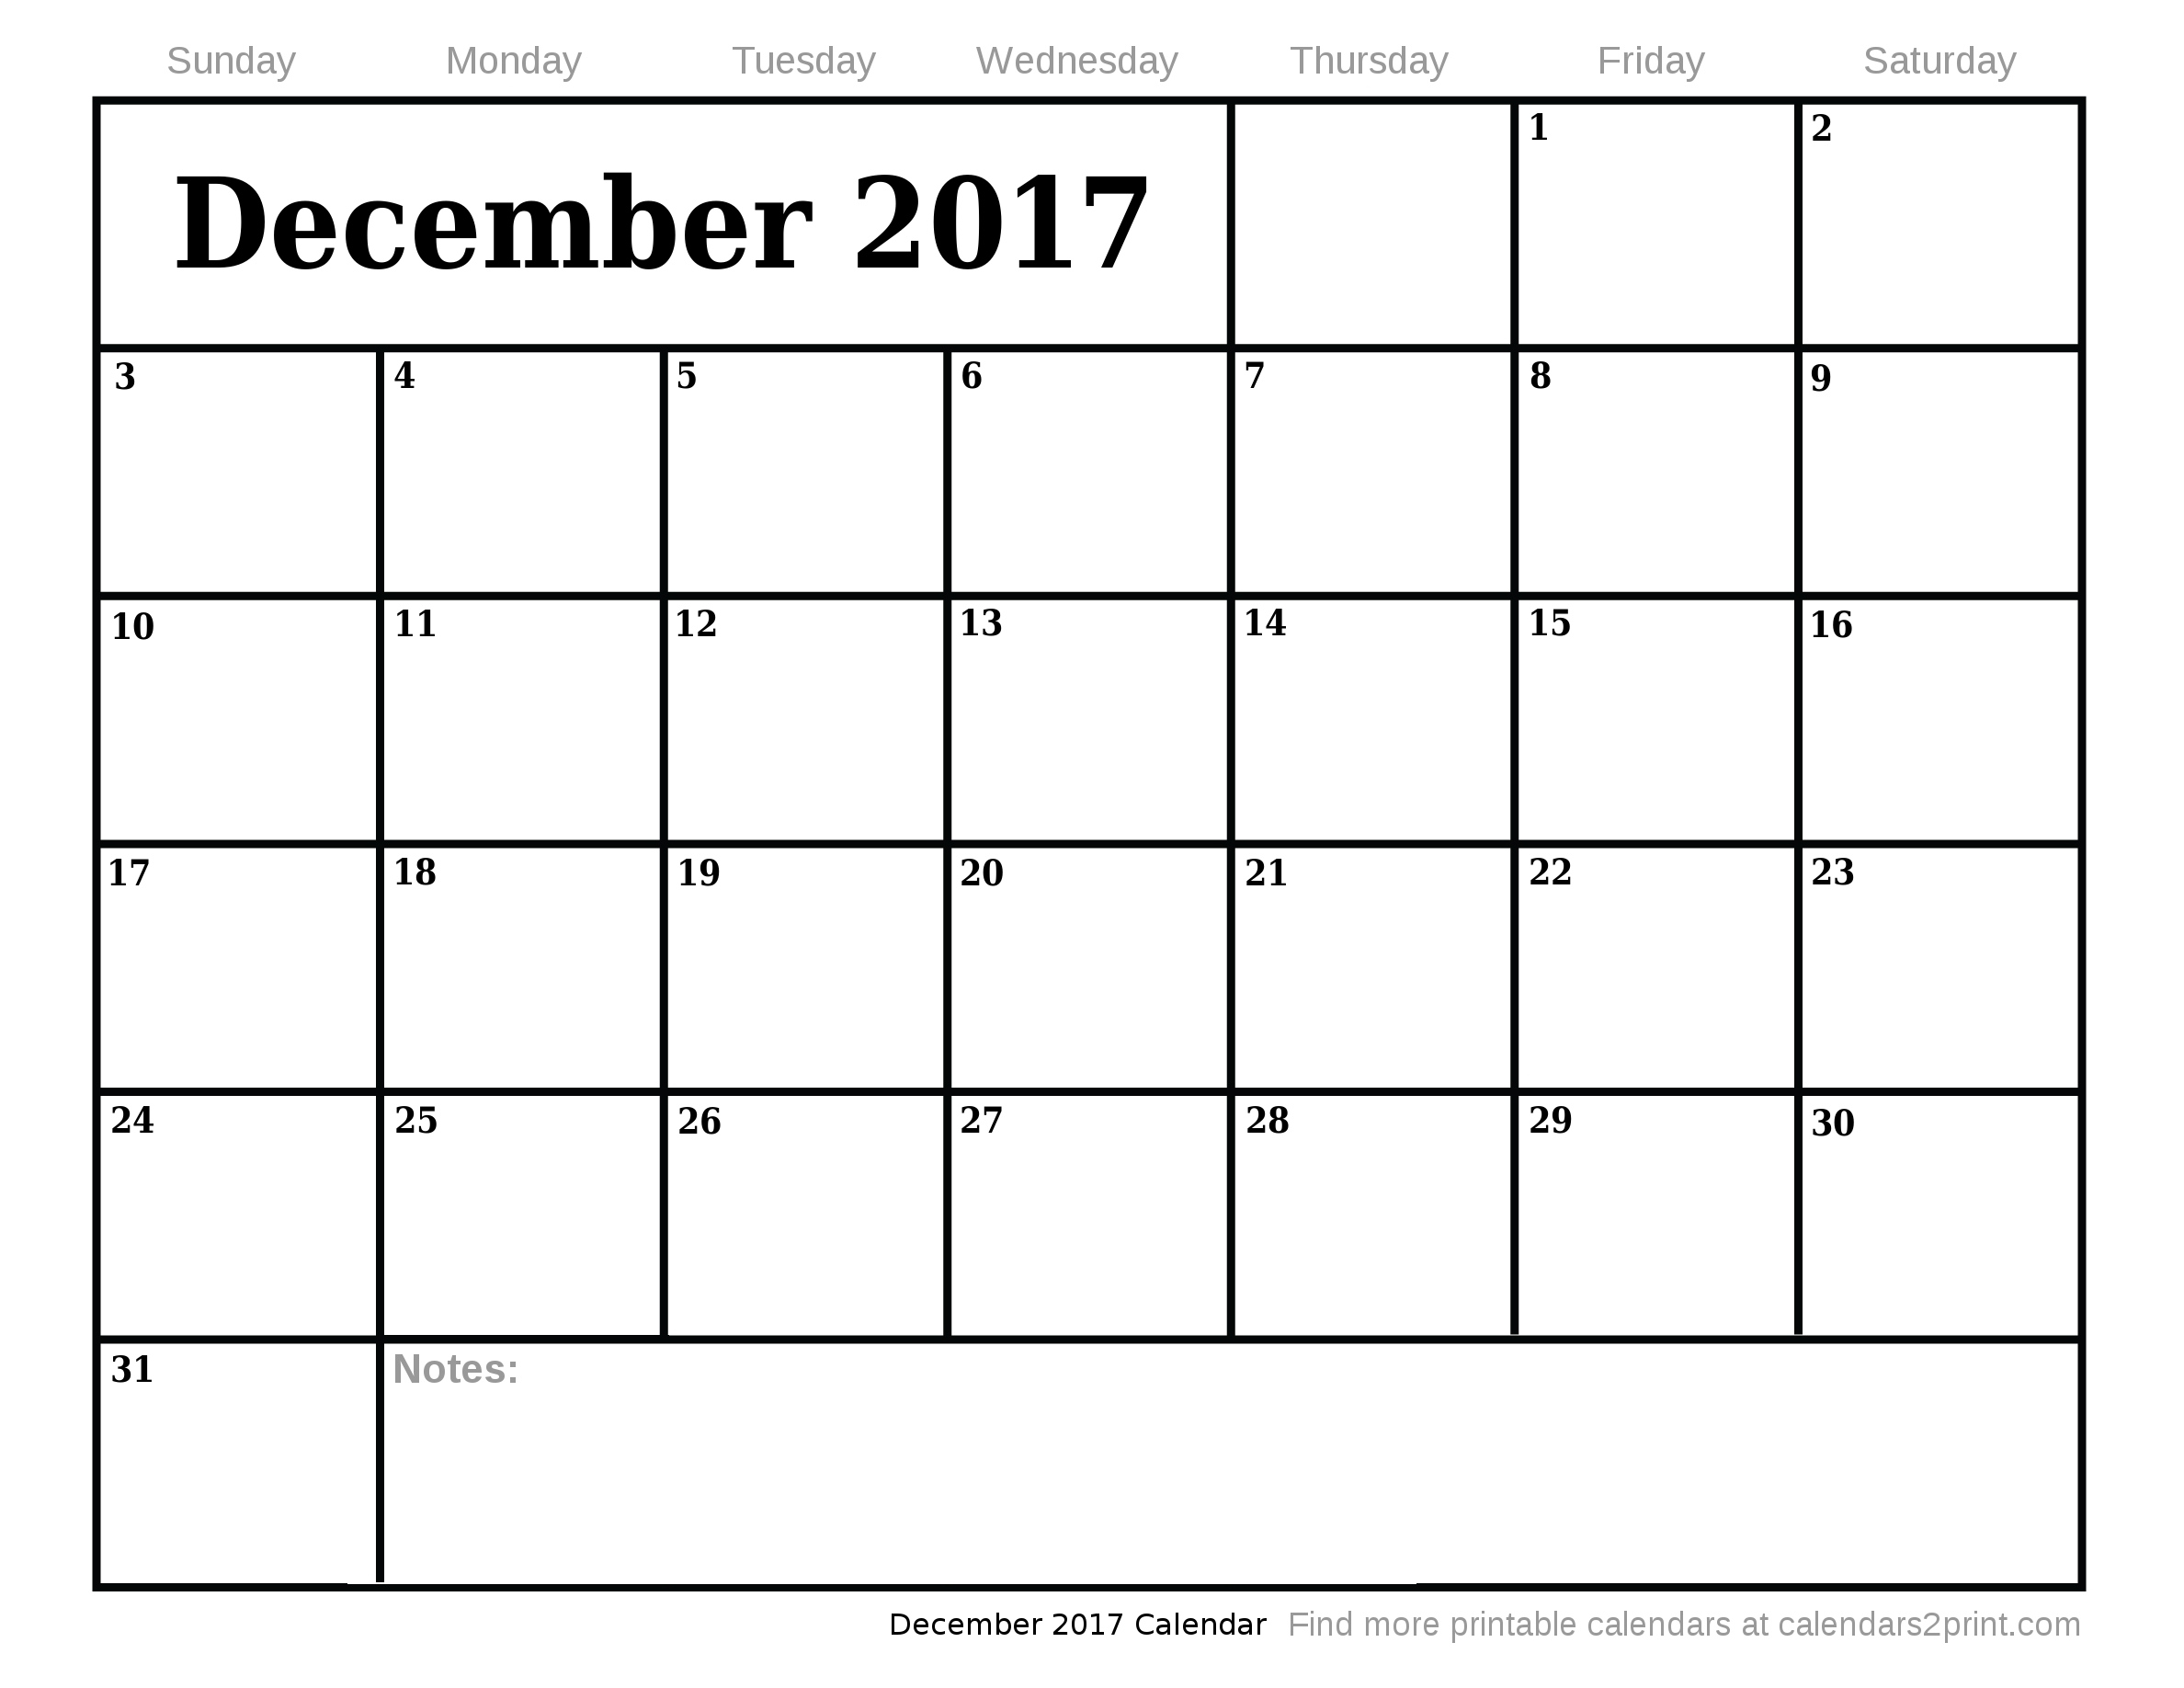 Dec 2017 Printable Calendar